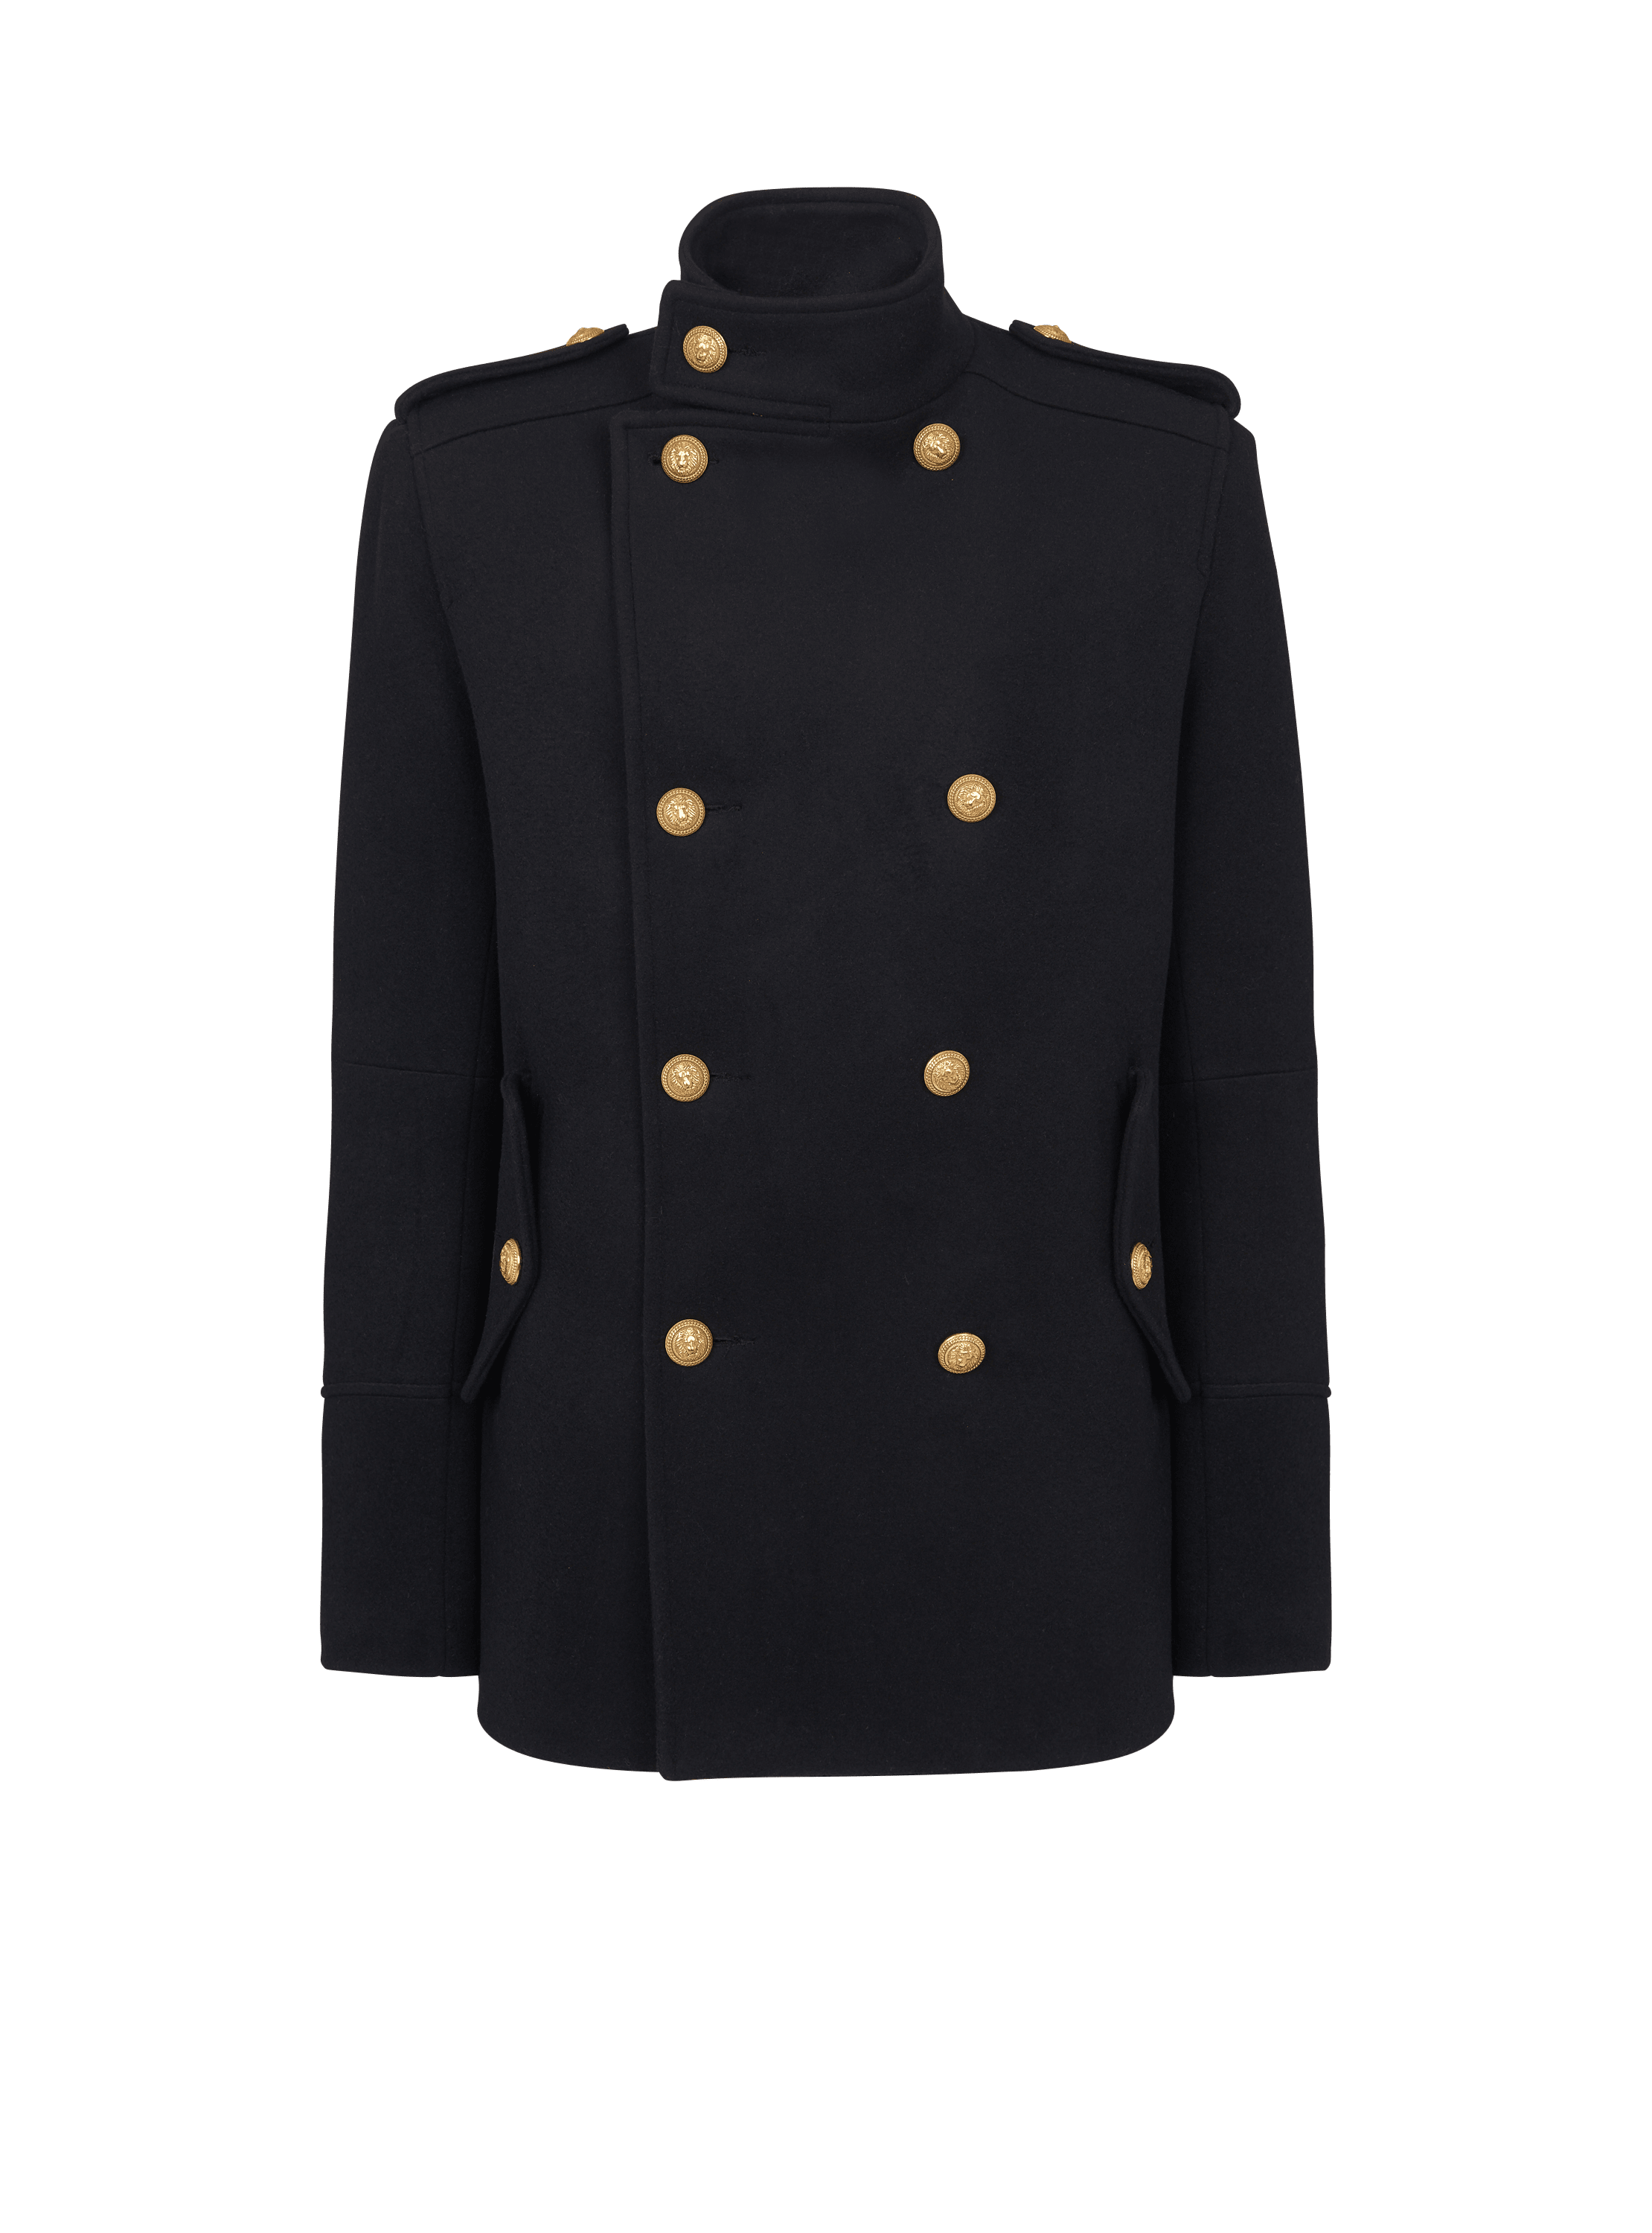 Short military-style coat, black, hi-res